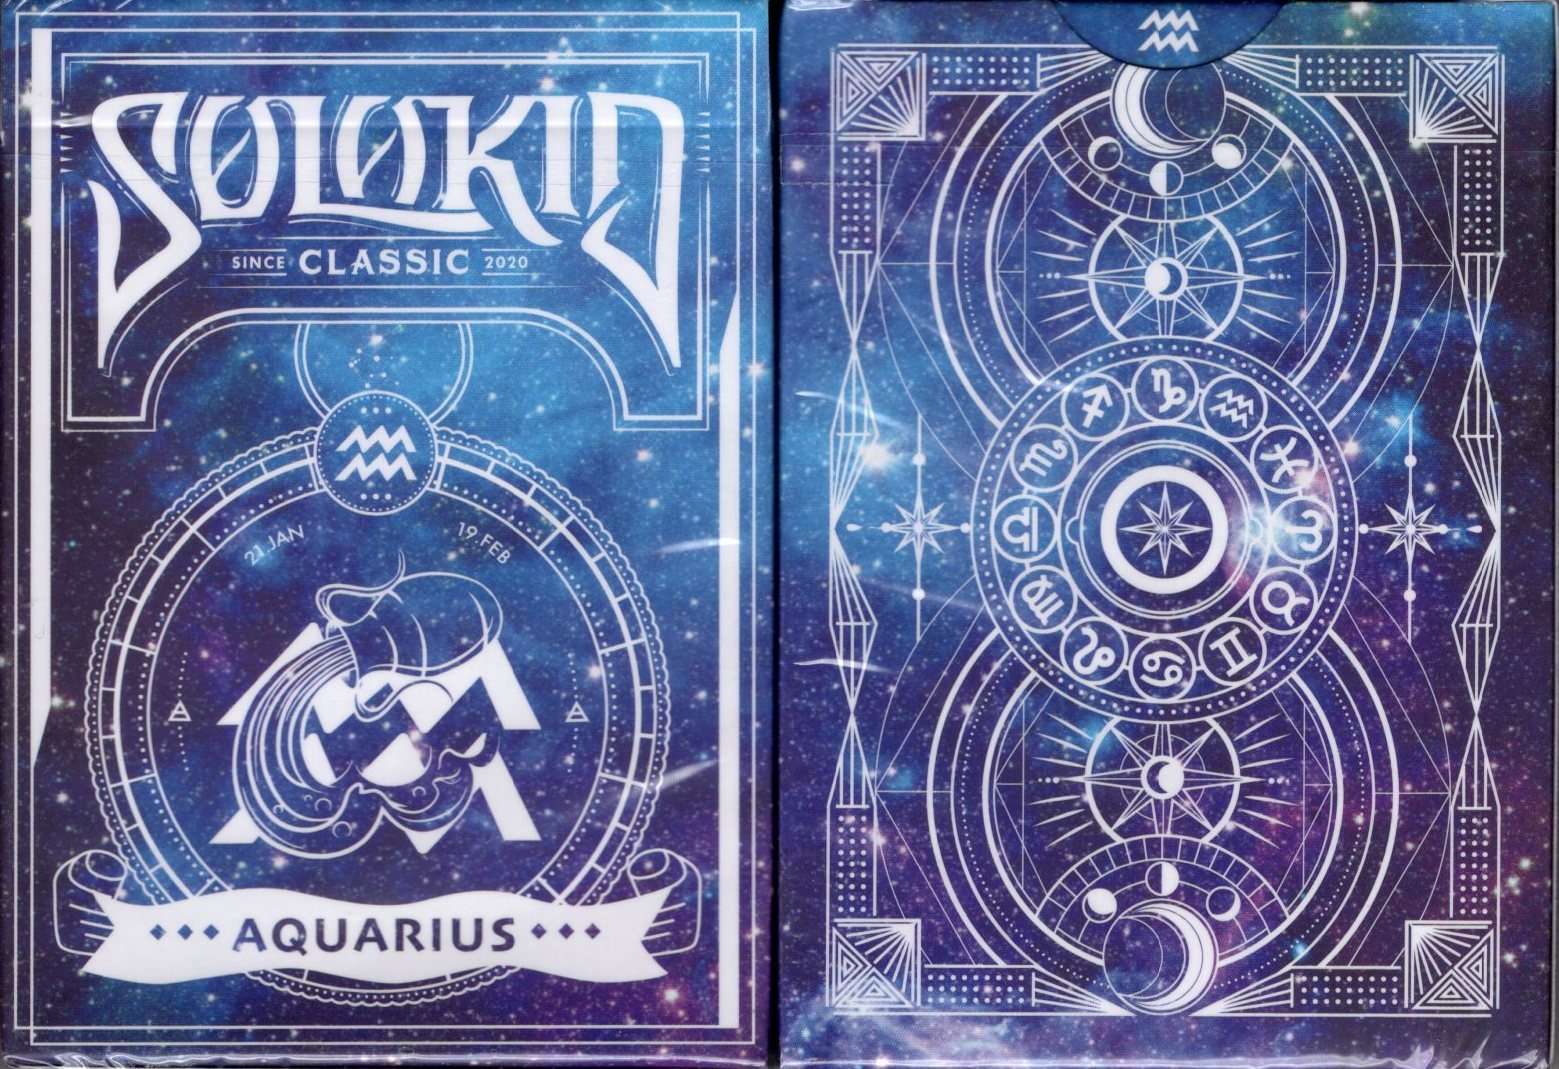 PlayingCardDecks.com-Solokid Constellation Series v2 Aquarius Playing Cards MPC